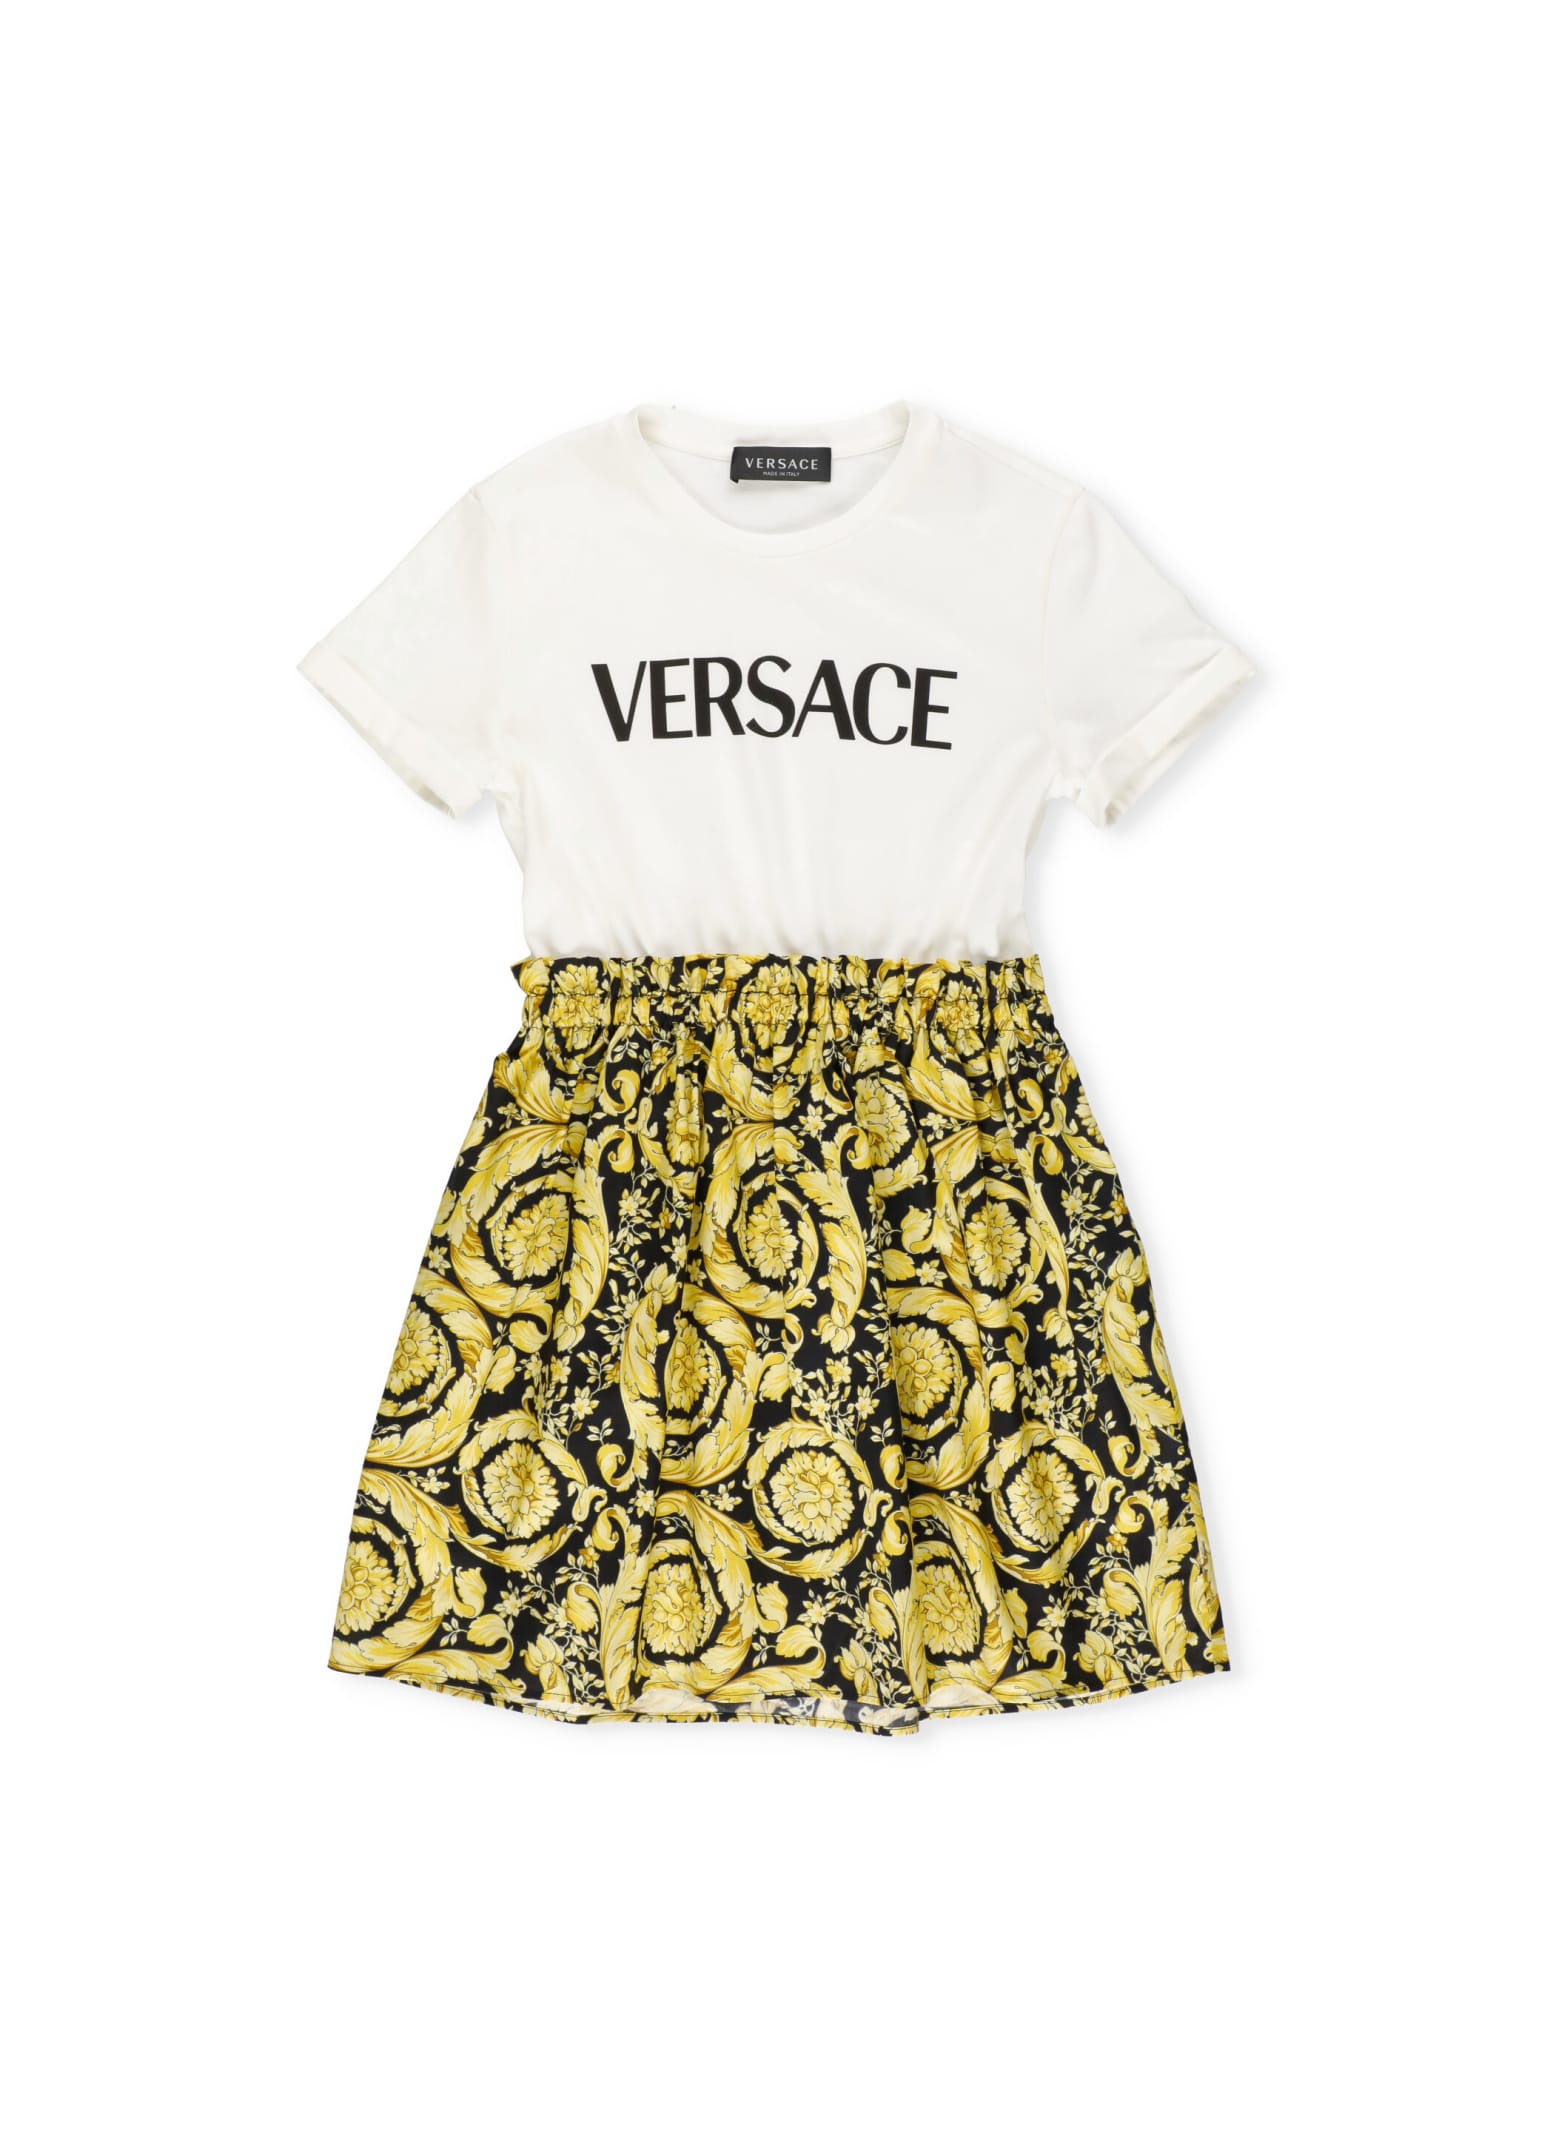 Versace Barocco T-shirt Dress